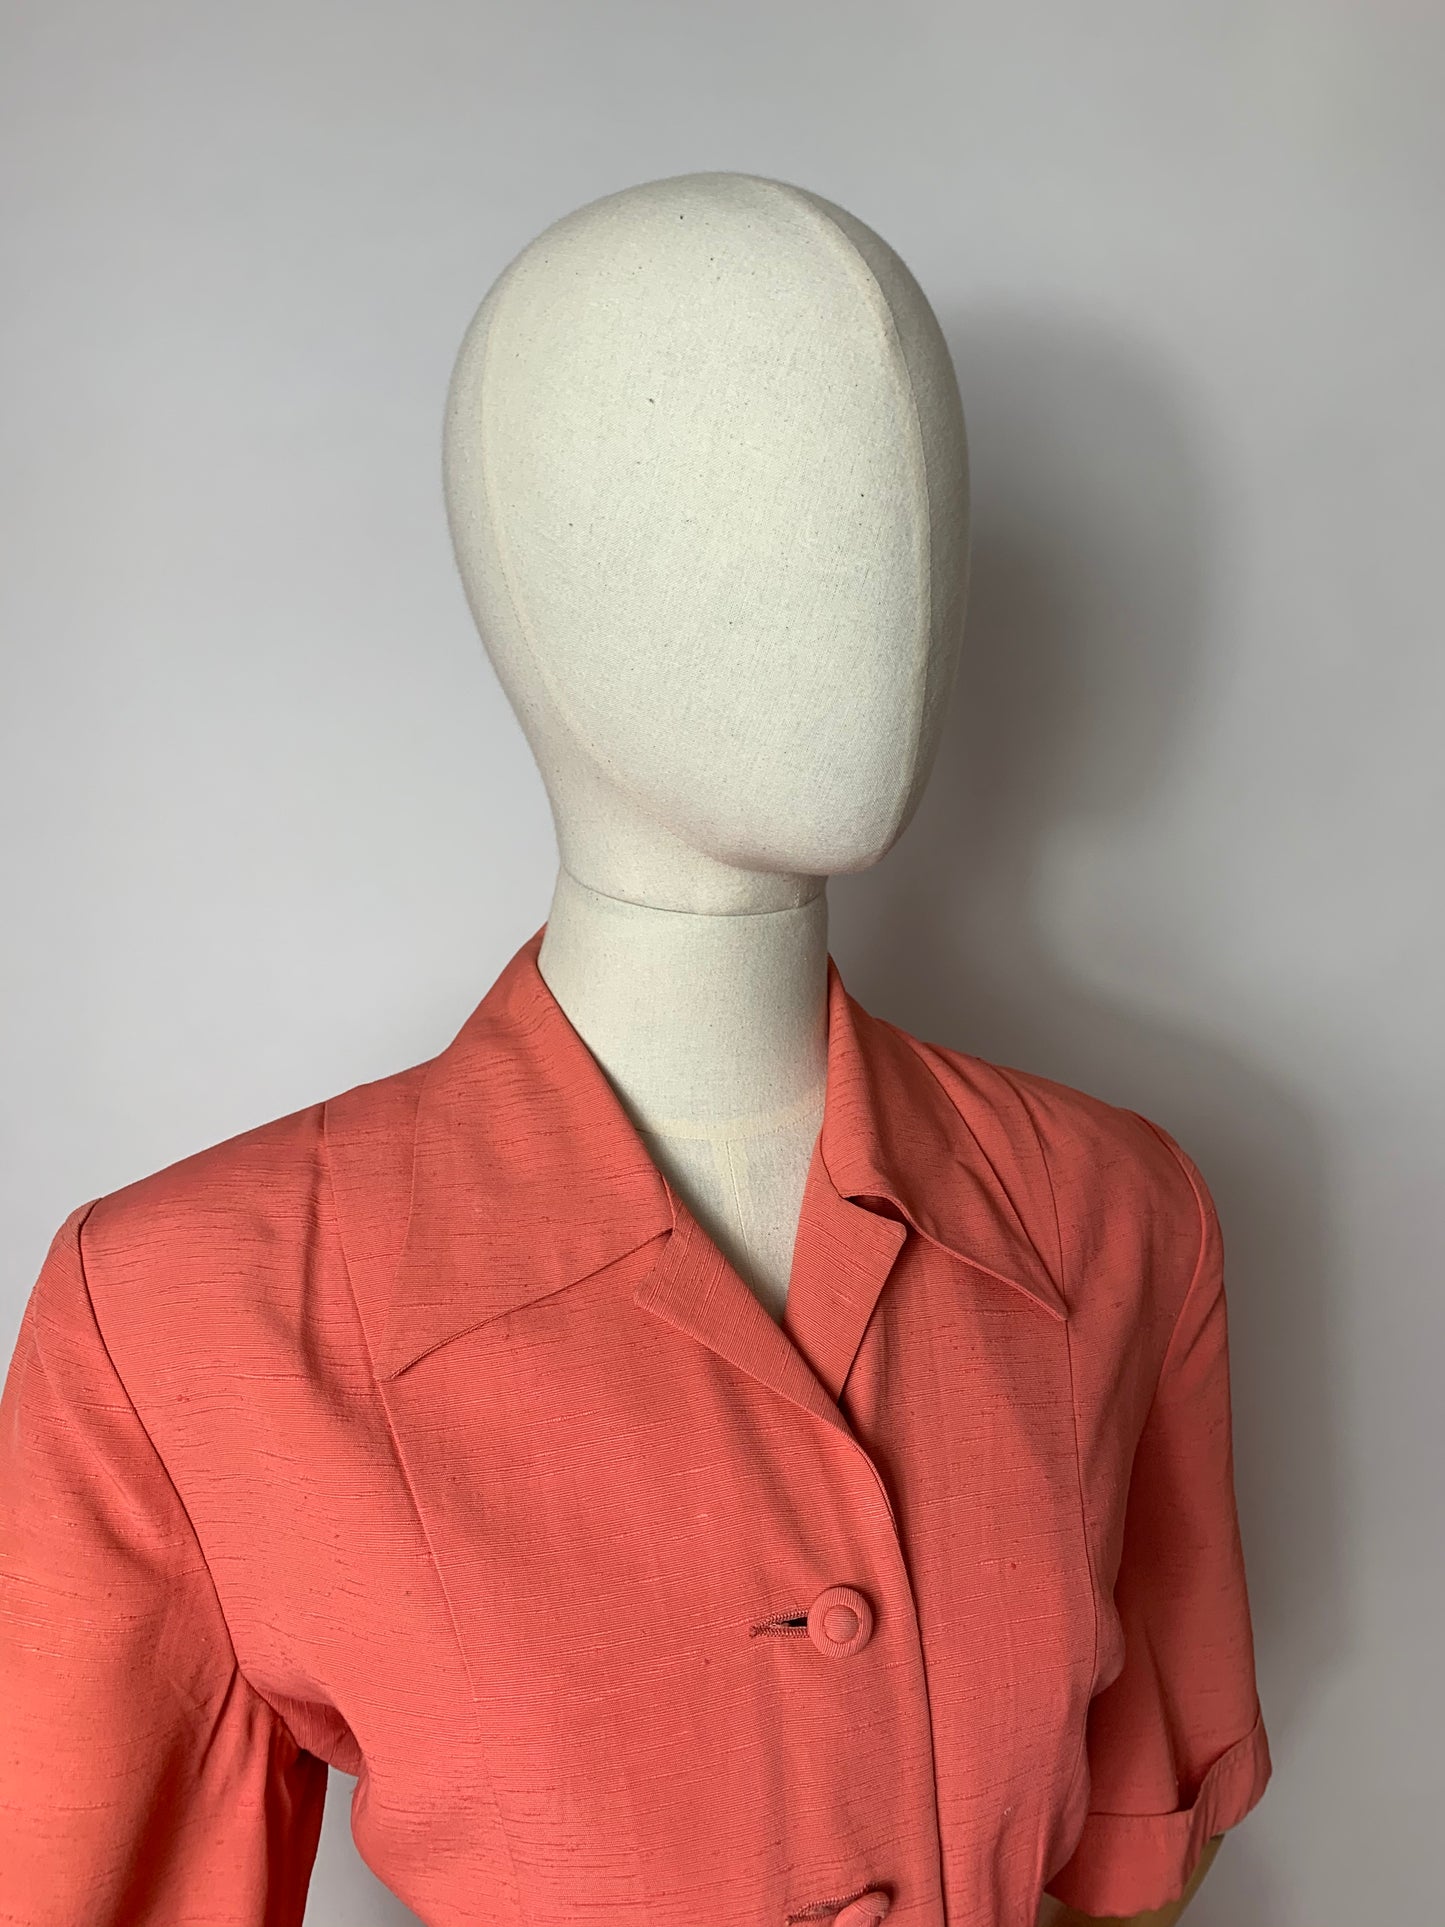 Original 1940’s 2pc Summer Suit - Fabulous Coral Colour and Lovely Detailing